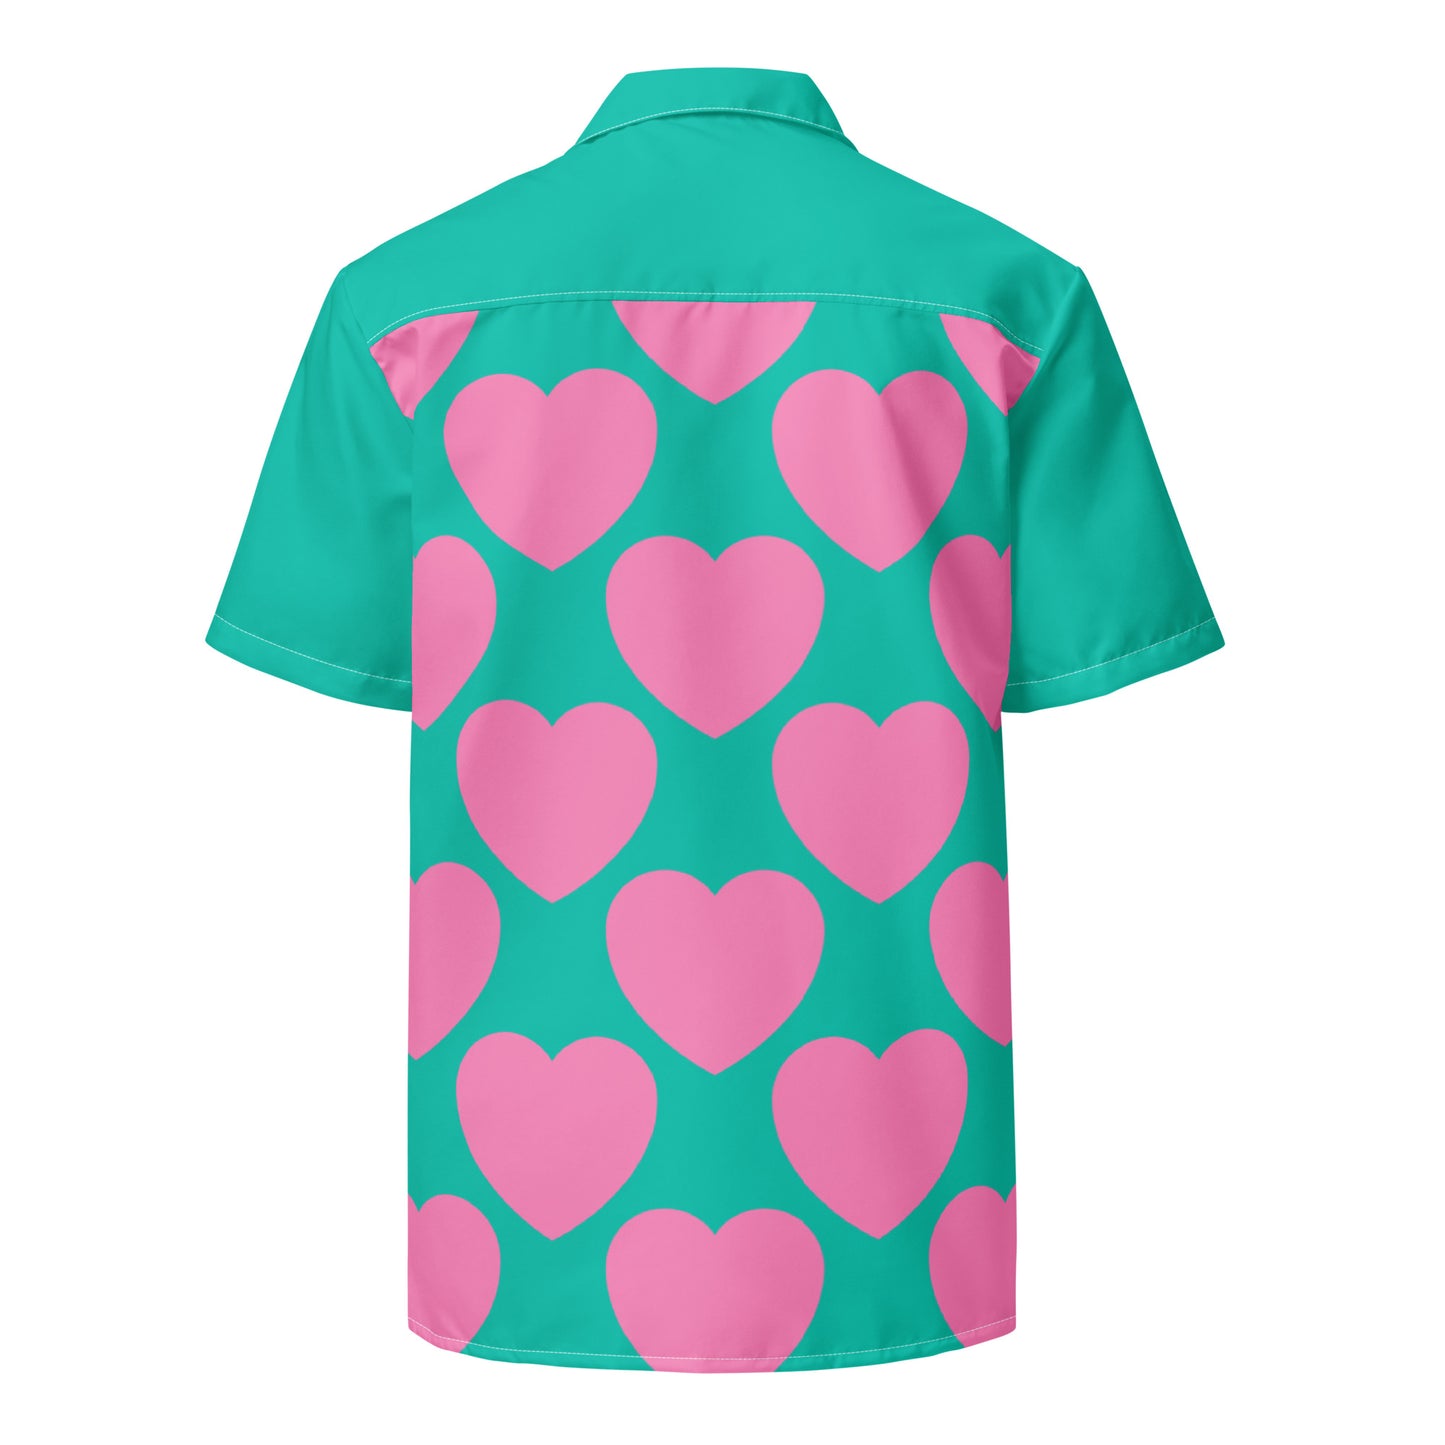 ELLIE LOVE pink mint - Unisex button shirt